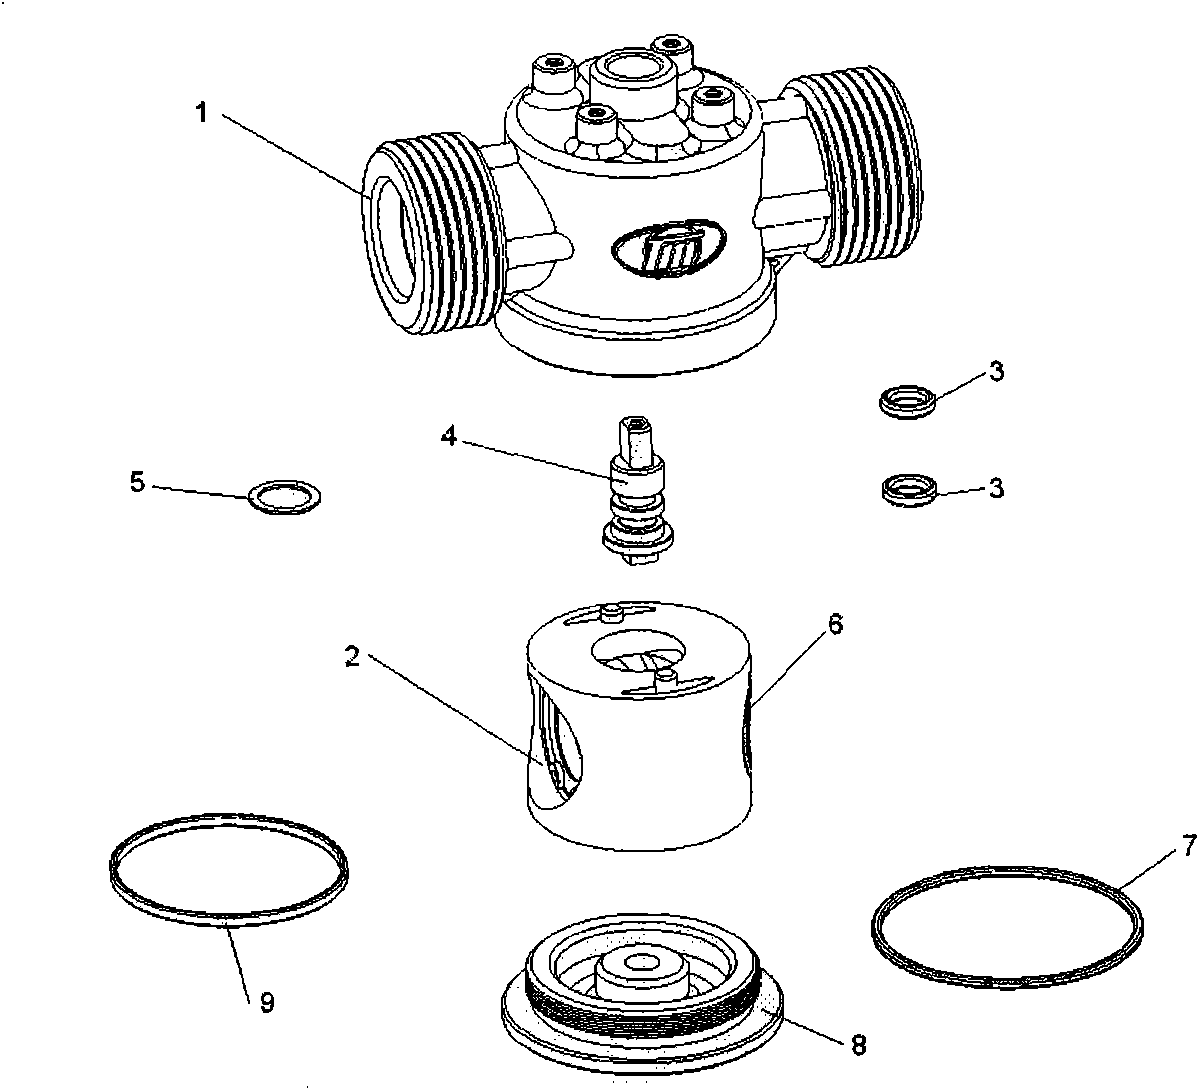 Novel down-mounting ball valve